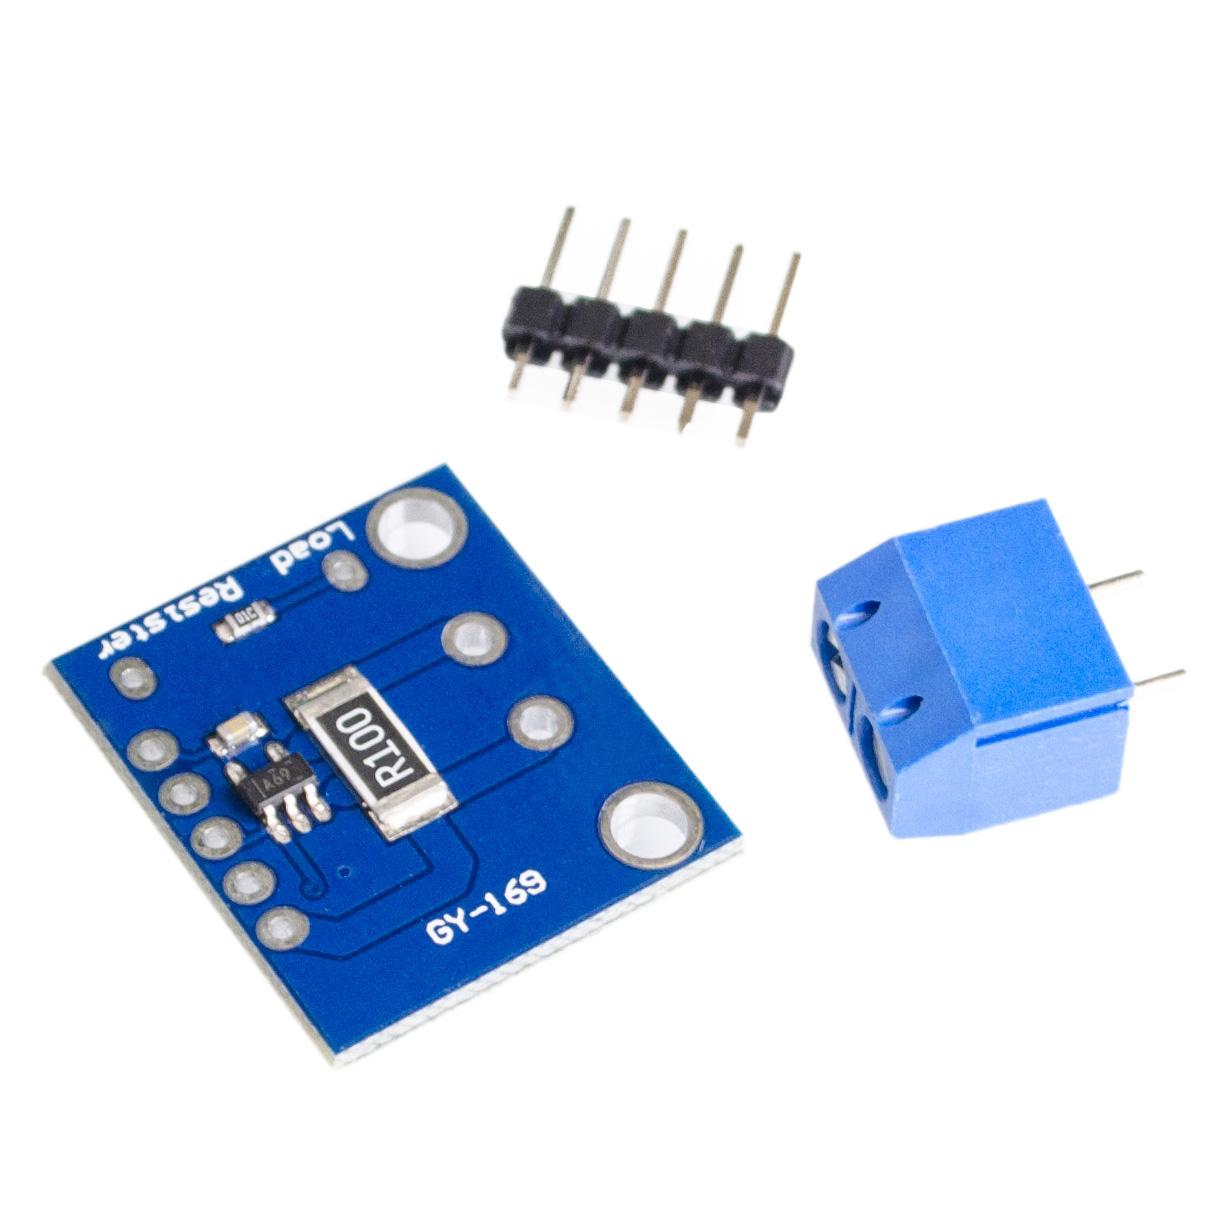 GY-169 INA169 precision current converter current sensor module